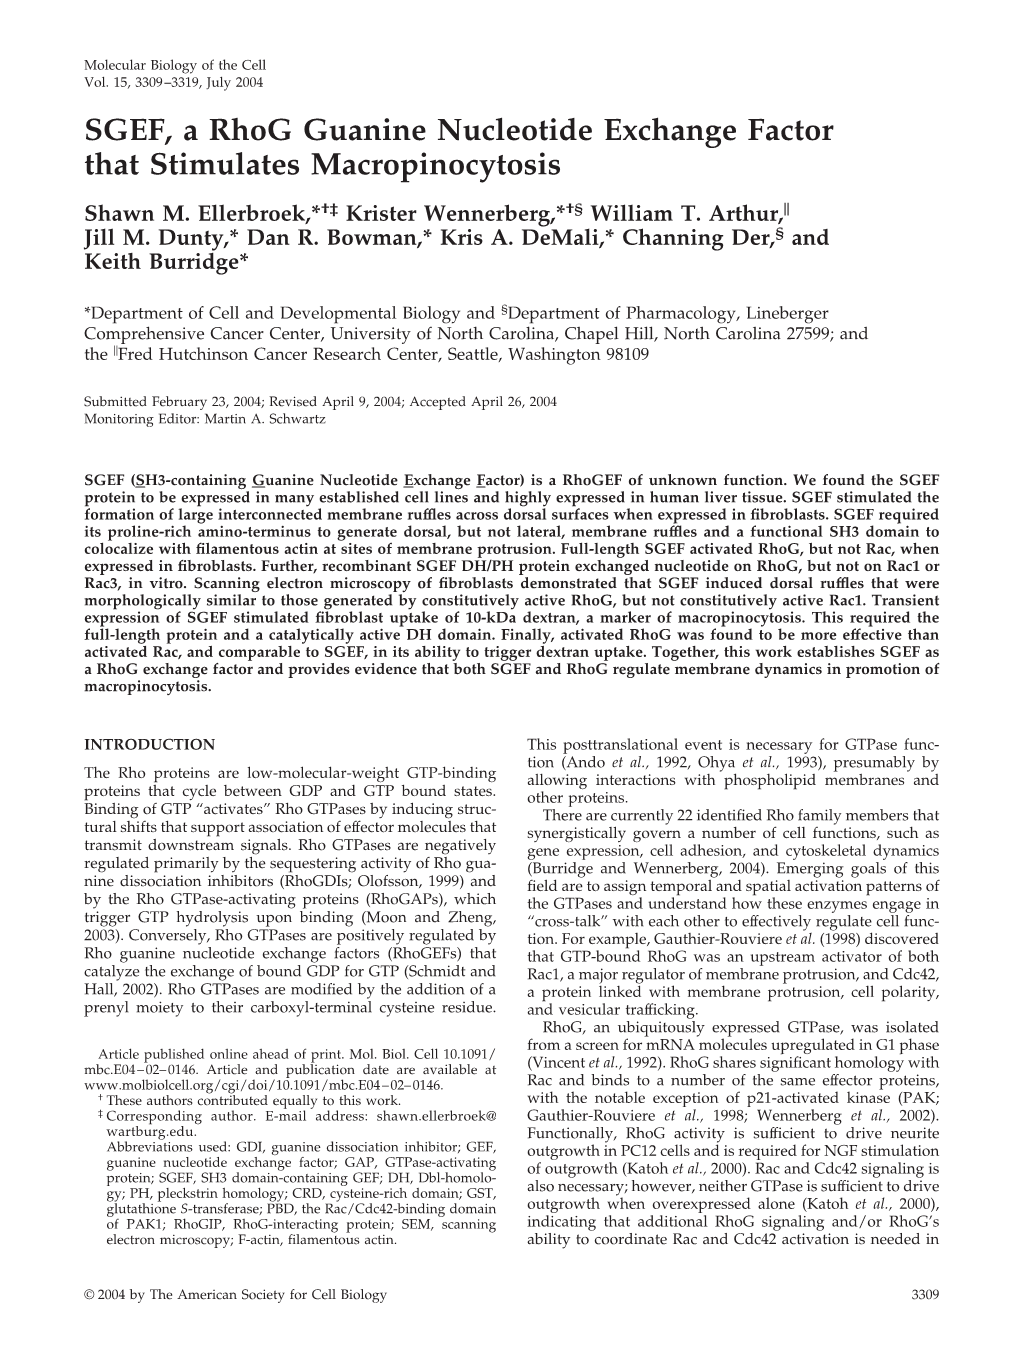 SGEF, a Rhog Guanine Nucleotide Exchange Factor That Stimulates Macropinocytosis Shawn M